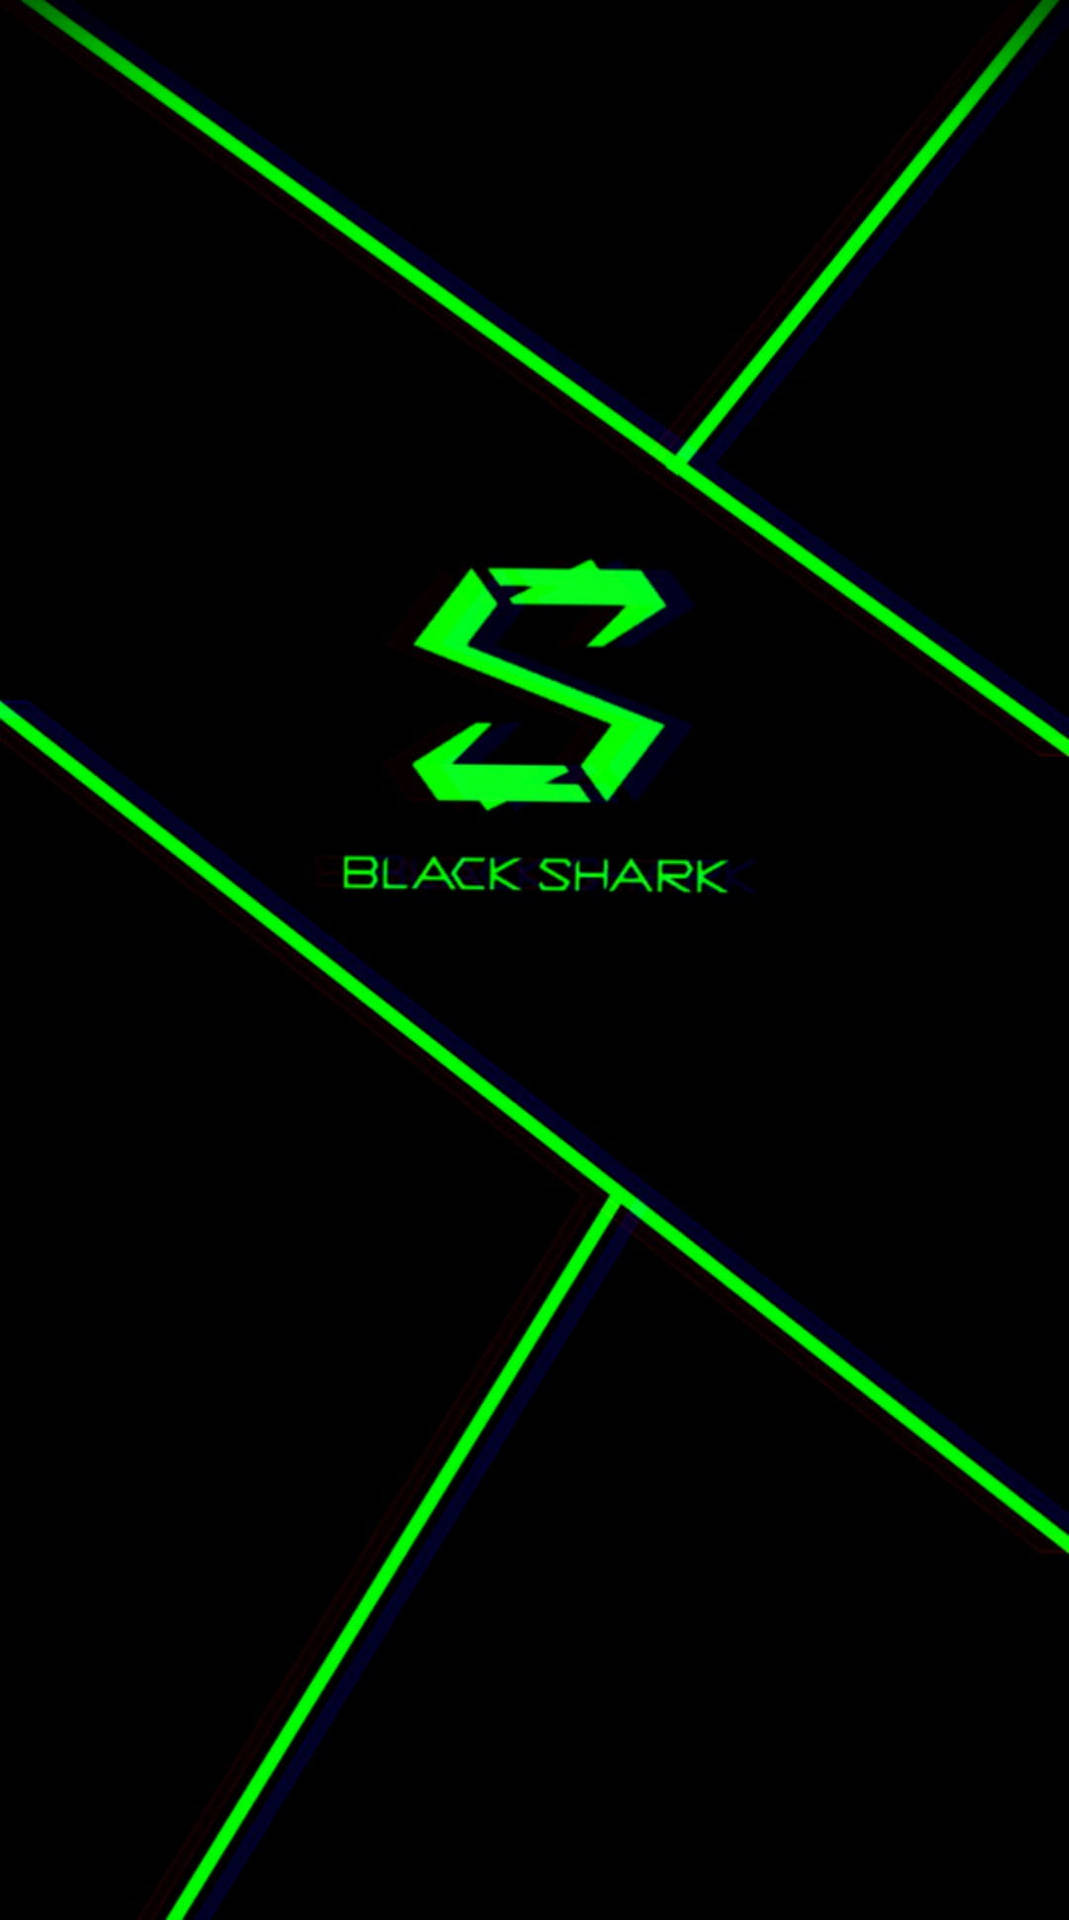 Black And Green Black Shark Background